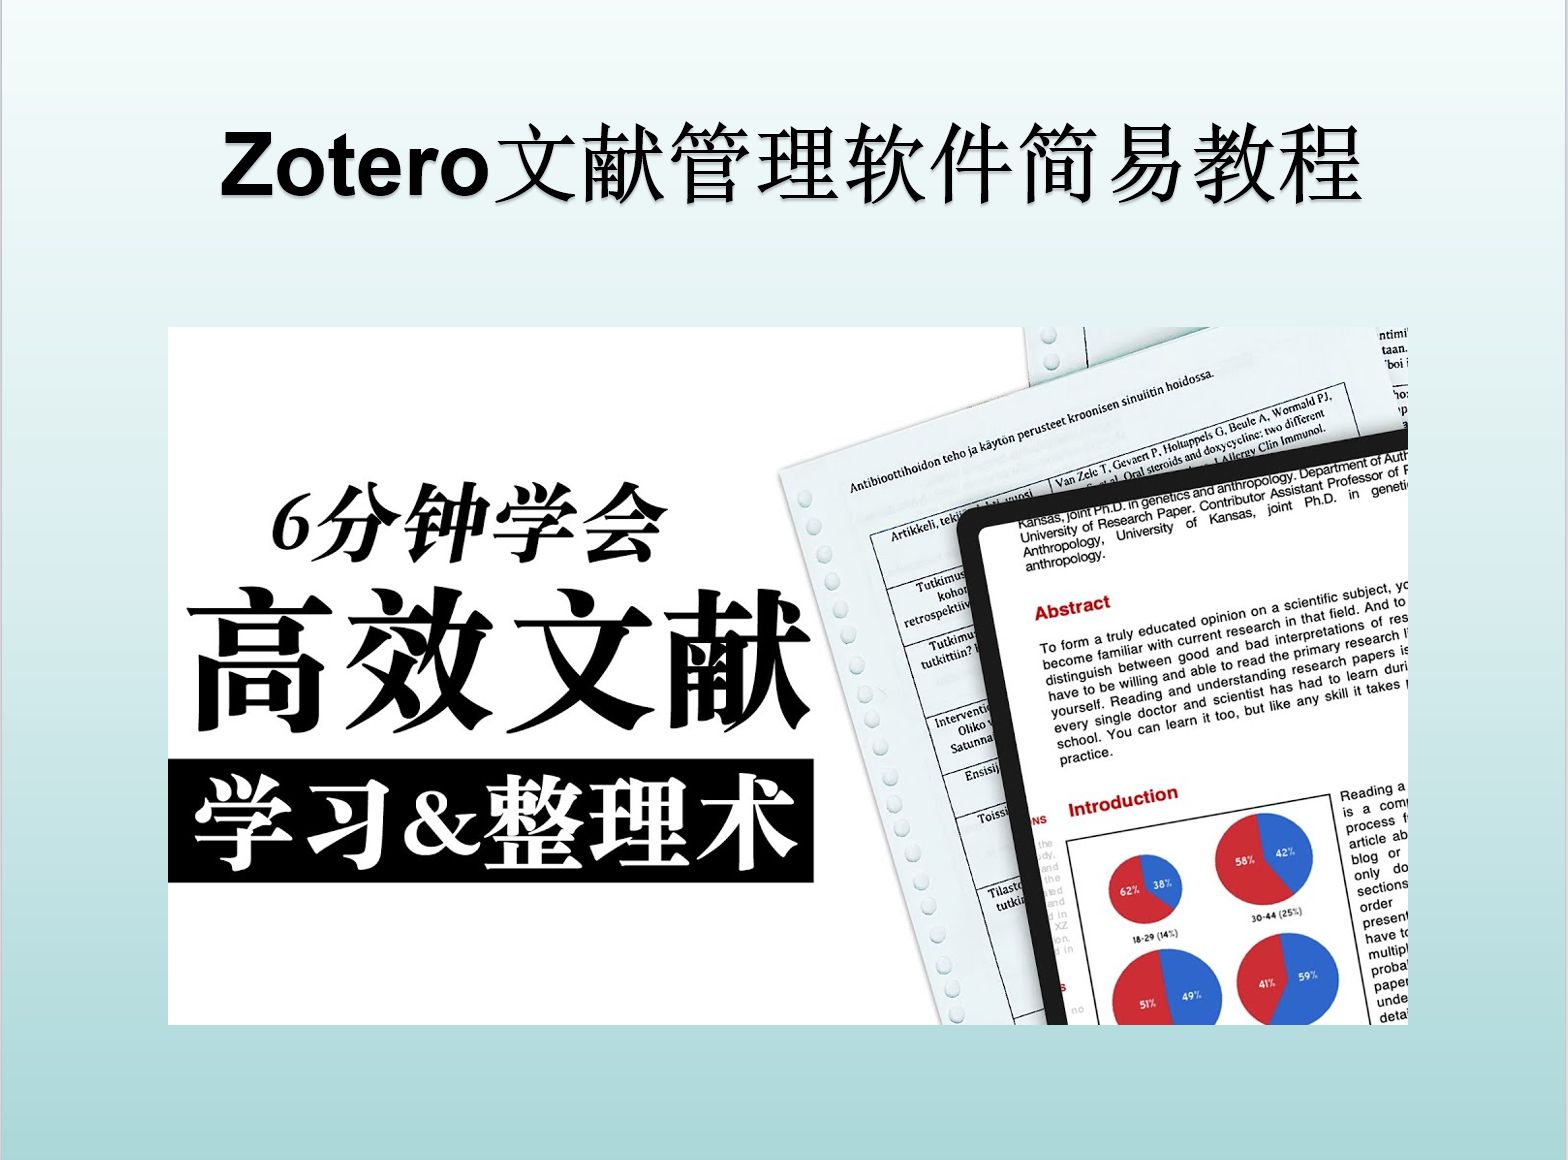 Zotero文献管理软件，超简易版教程来啦！